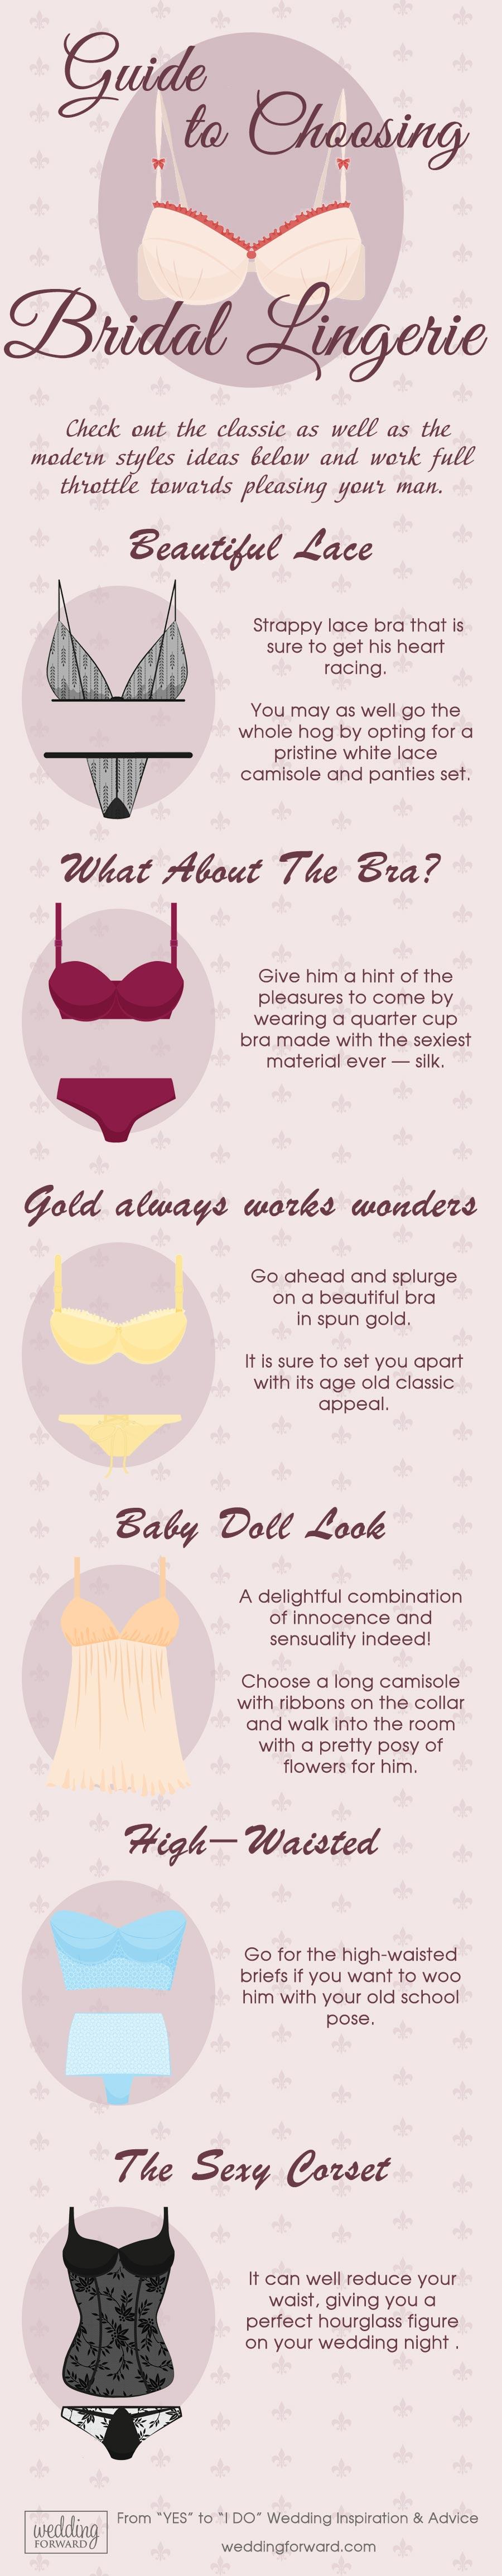 guide to сhoosing bridal lingerie